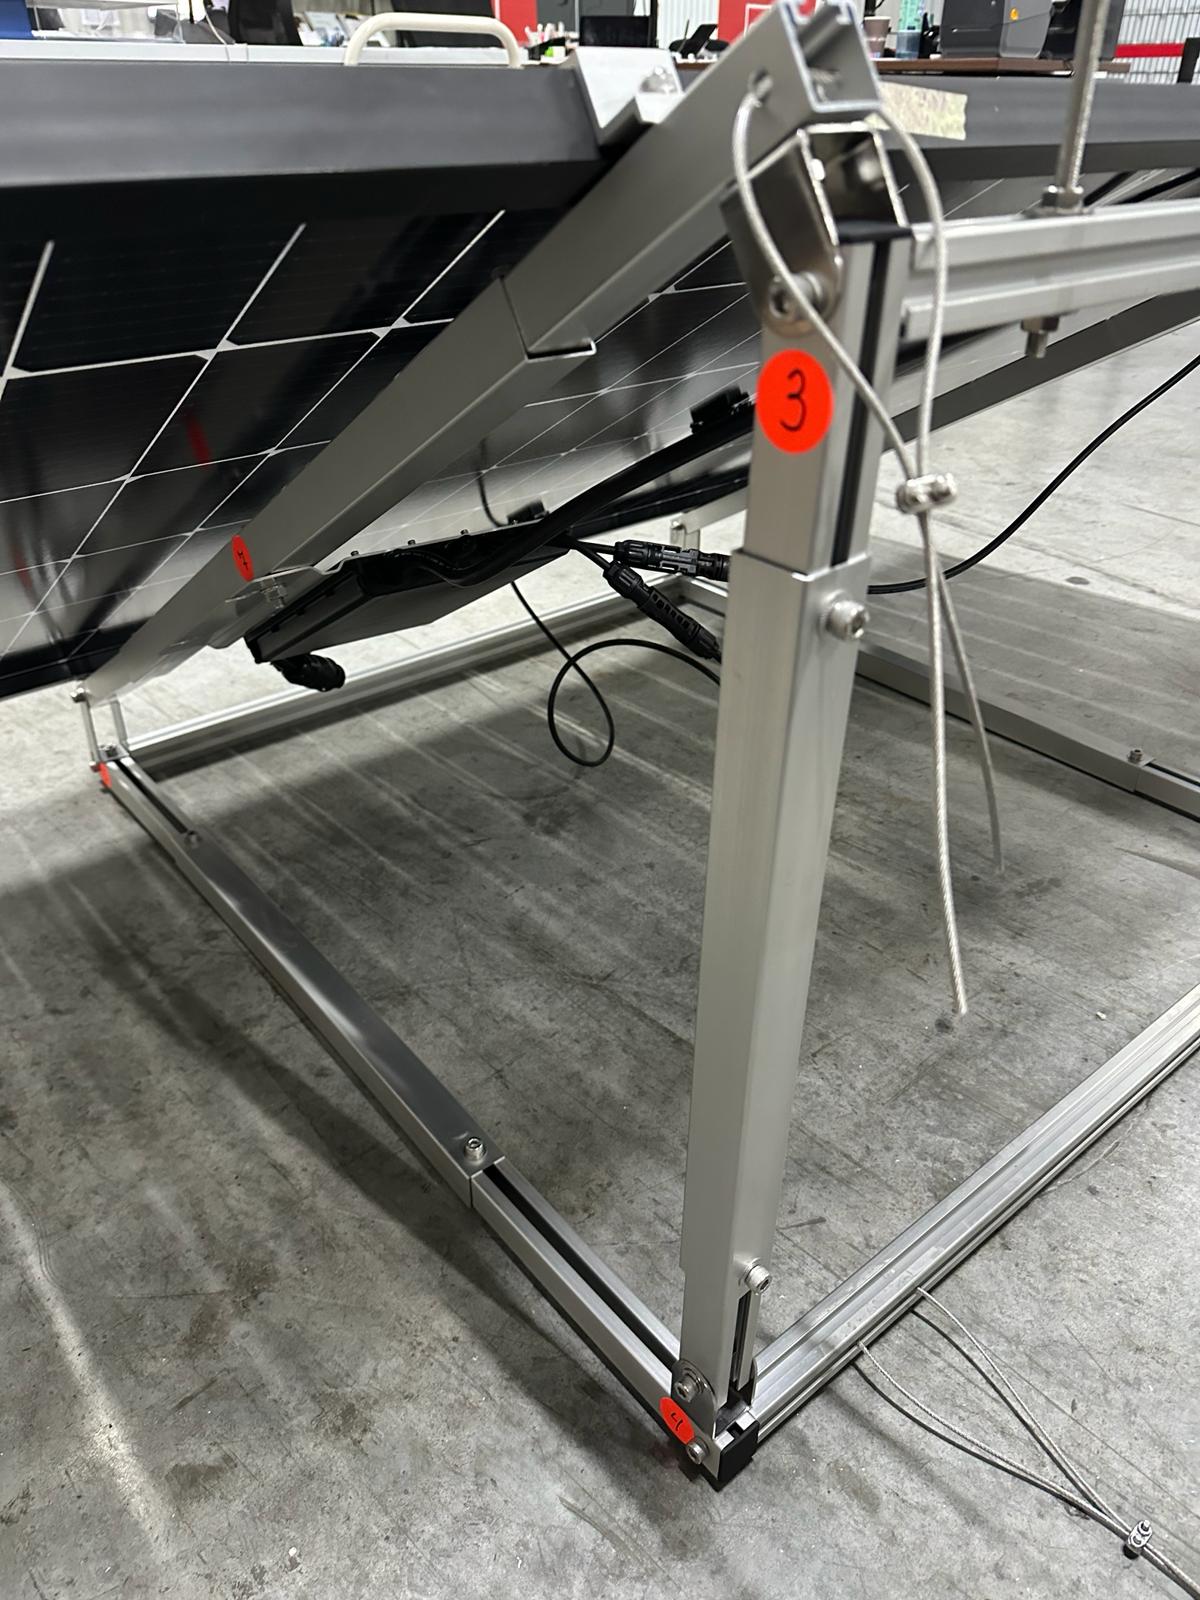 Balcony power station universal solar module holder for balcony wall flat roof